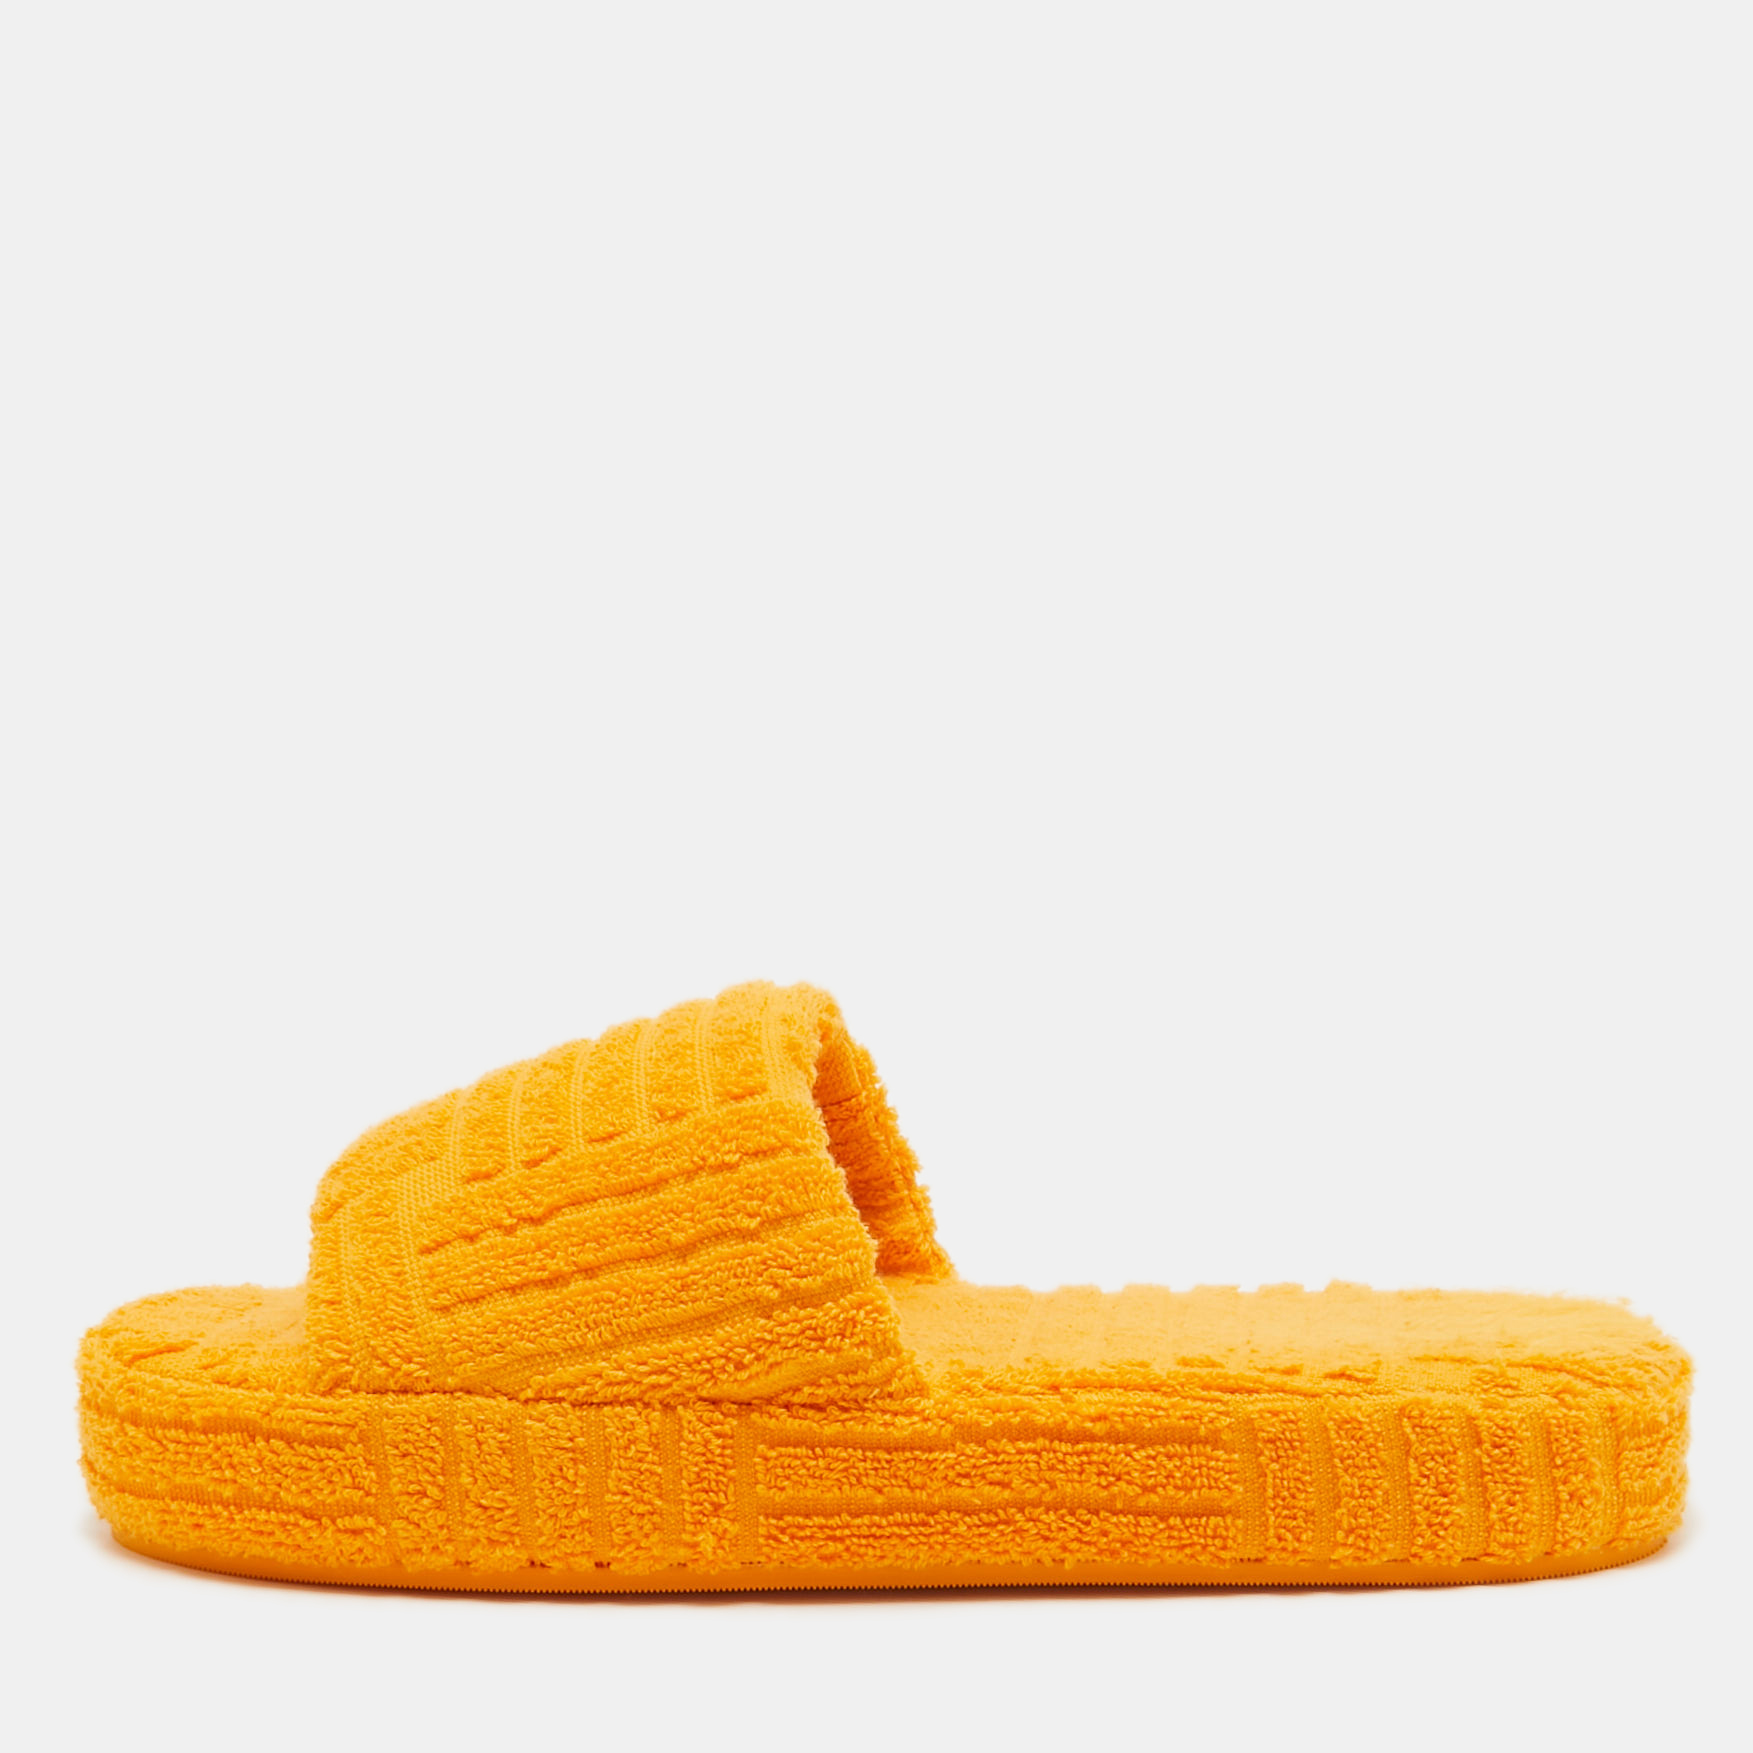 Bottega veneta orange cotton fabric resort sponge platform slides size 40